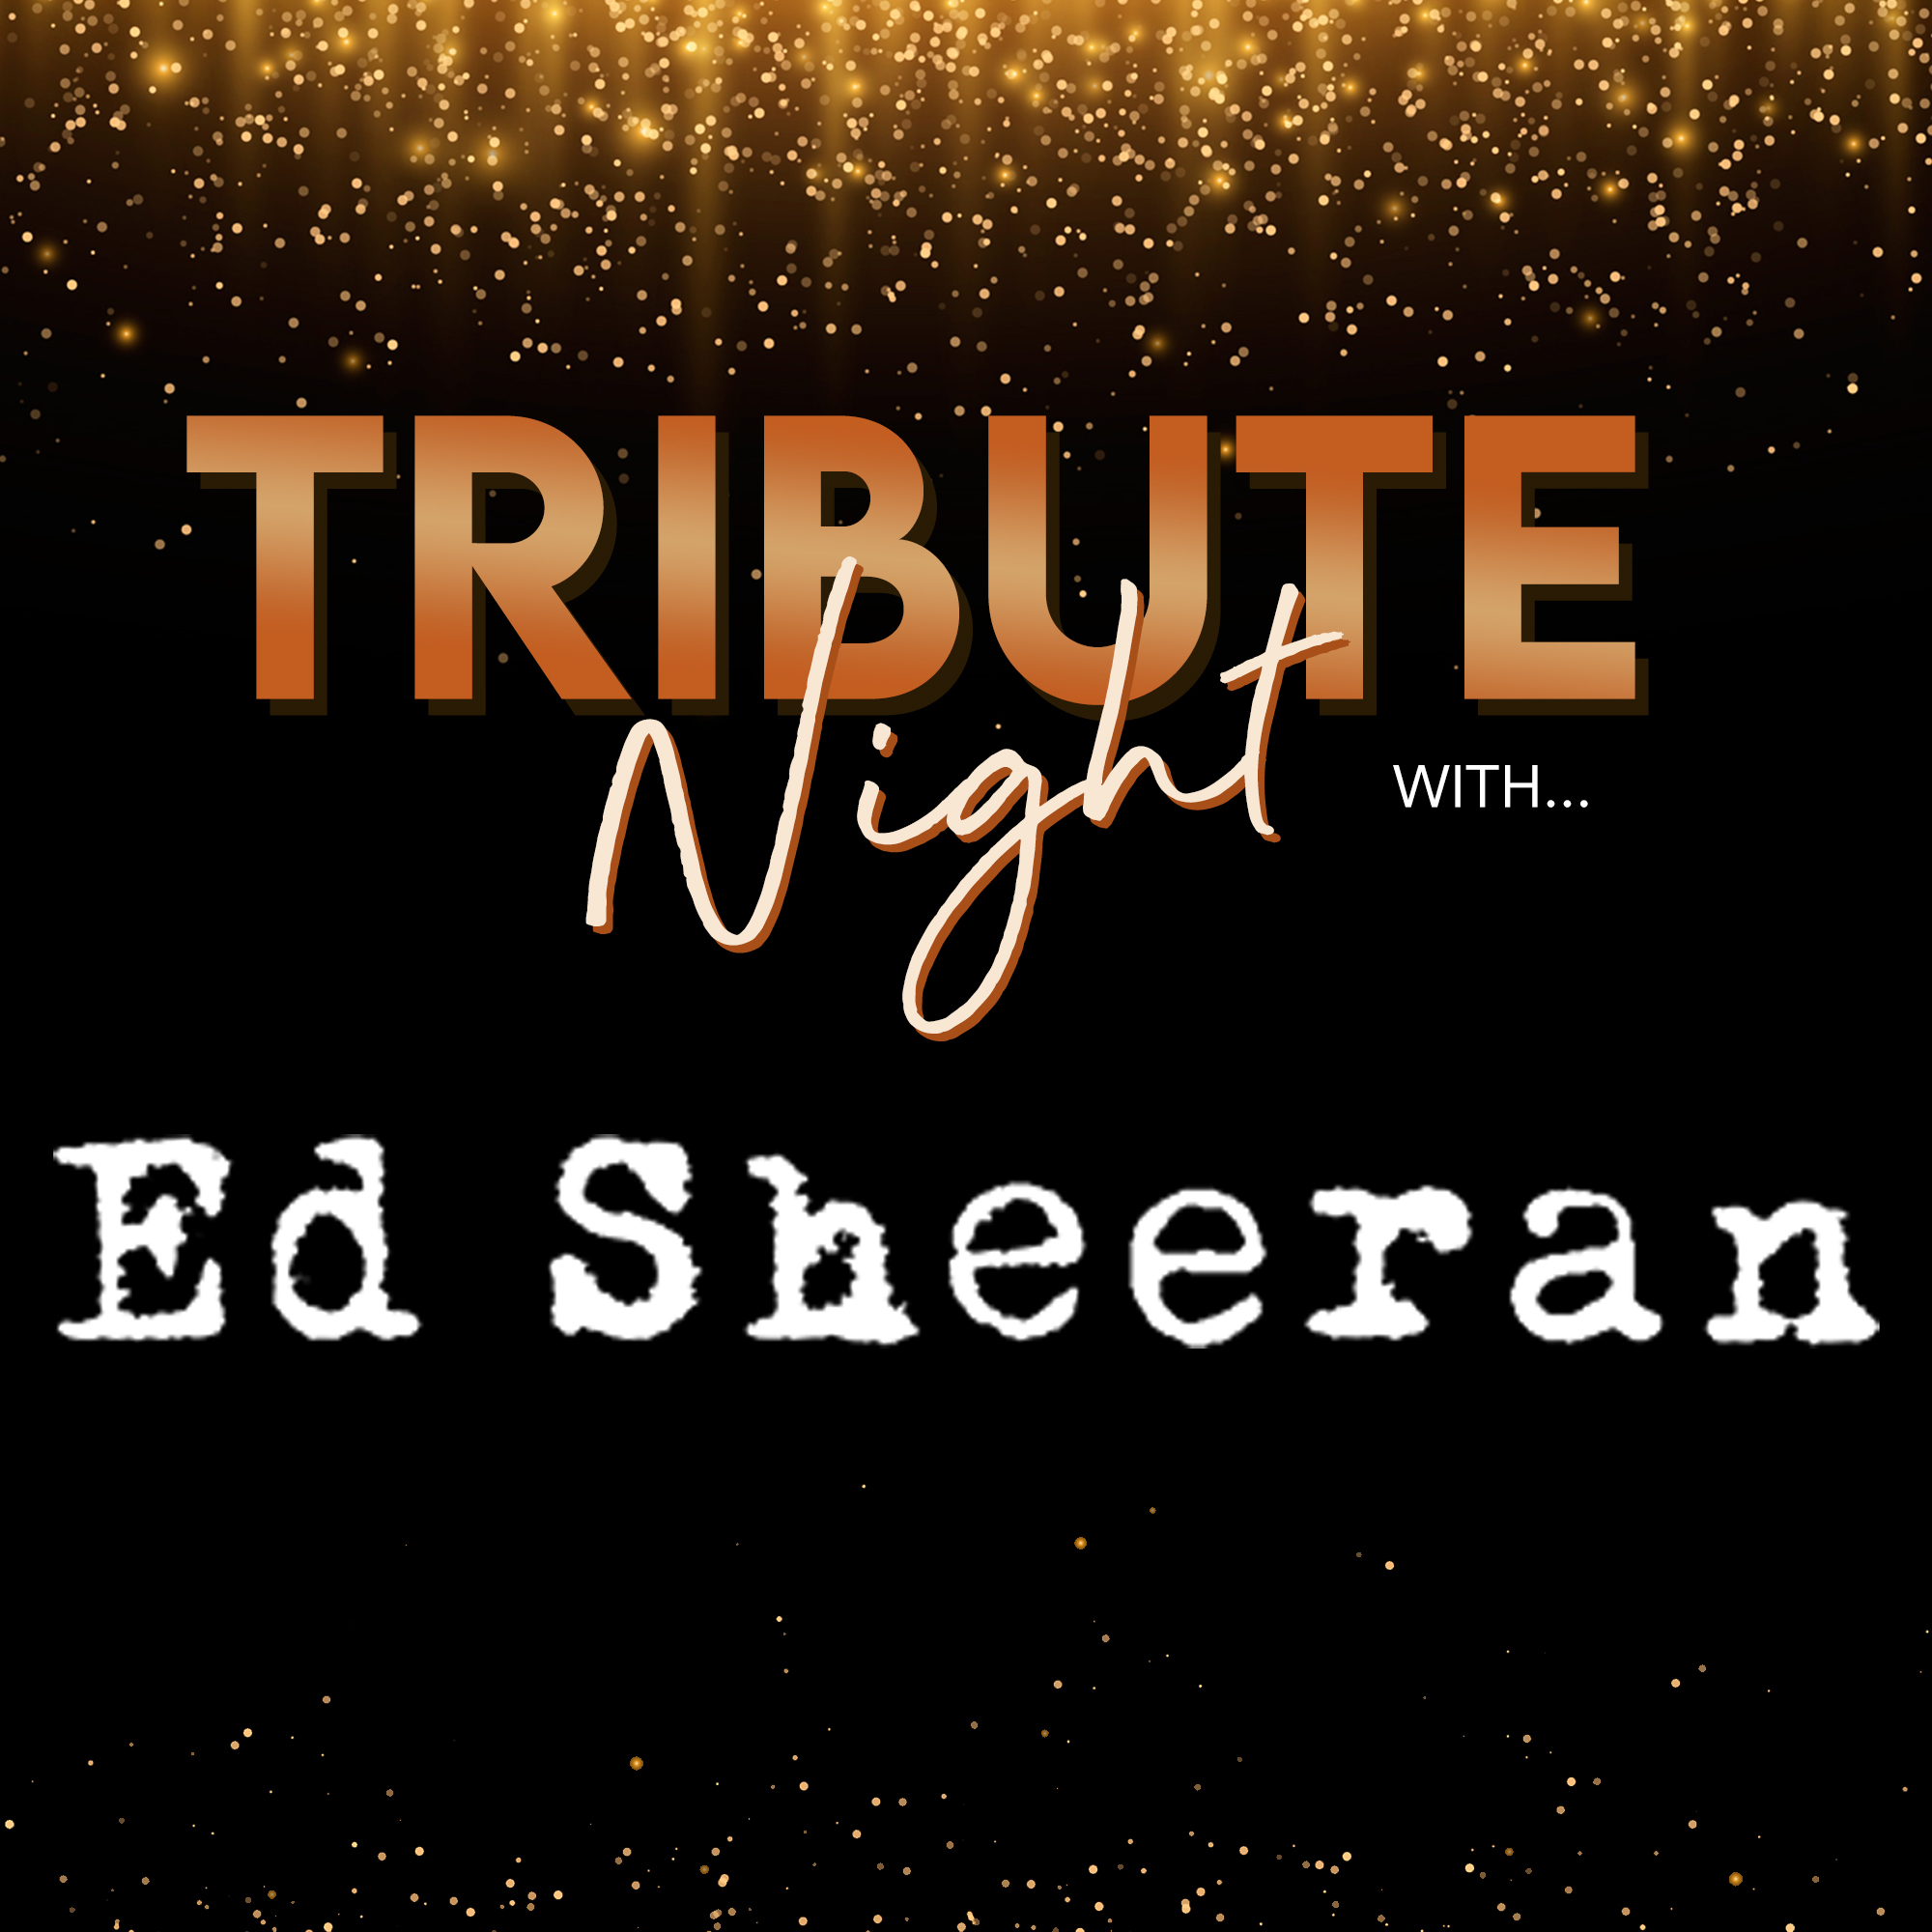 Tribute Night with  Ed Sheeran (Daniel East)